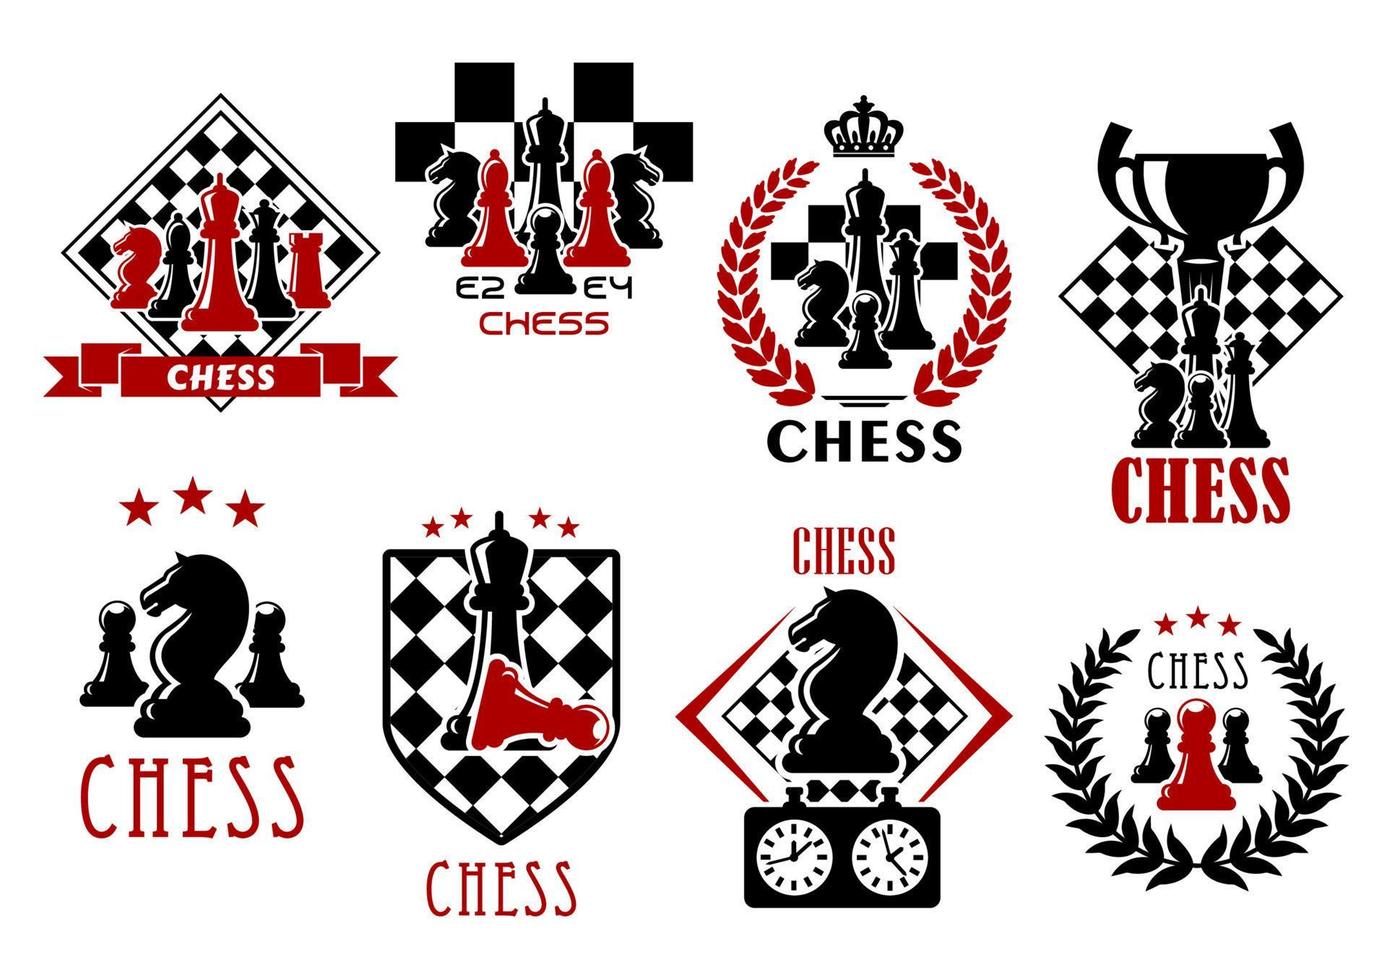 Chess game heraldic symbols and emblems vector